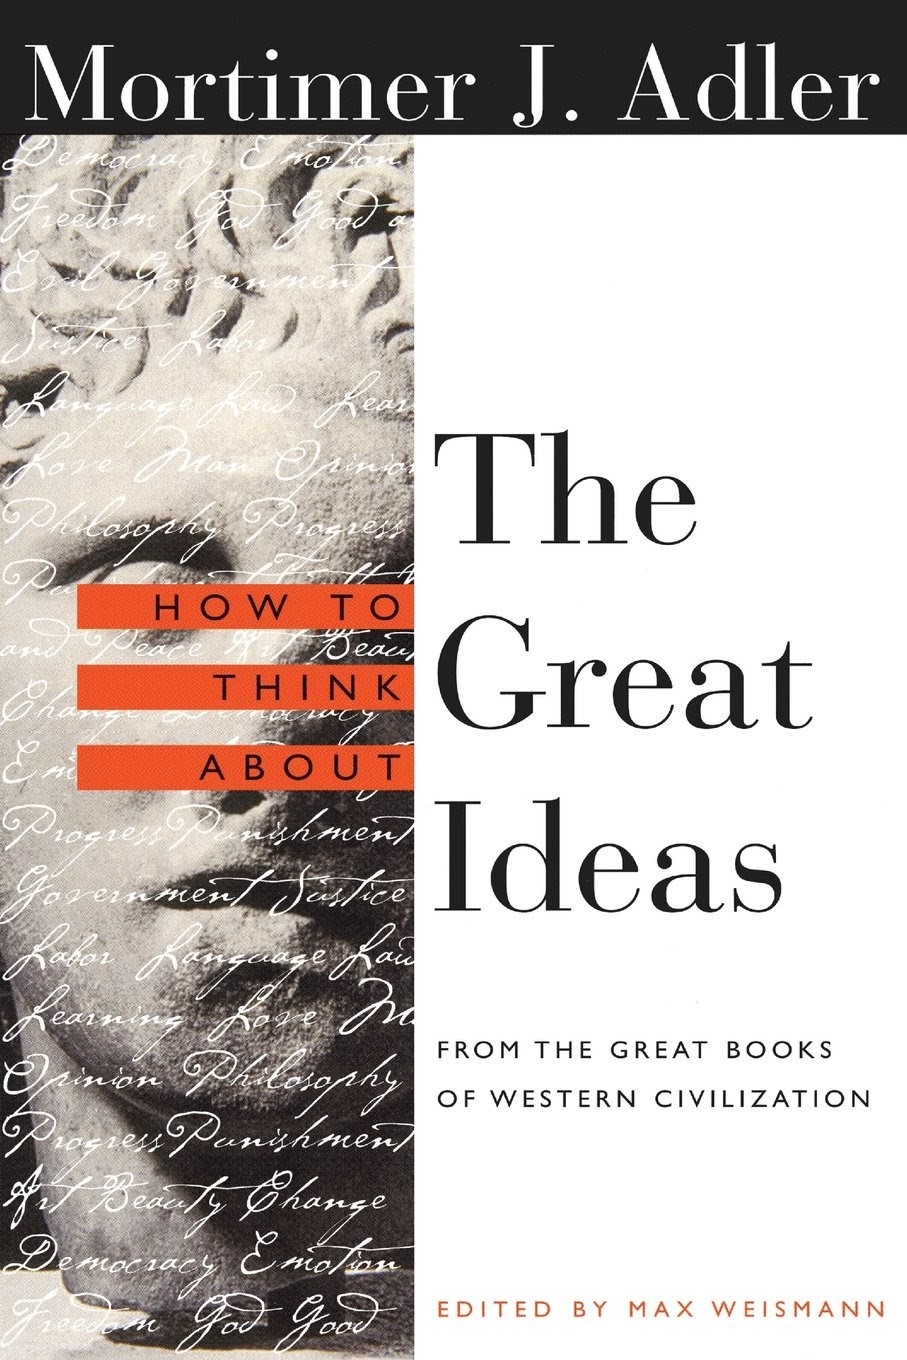 The Great Ideas Vol II - Alternate Version